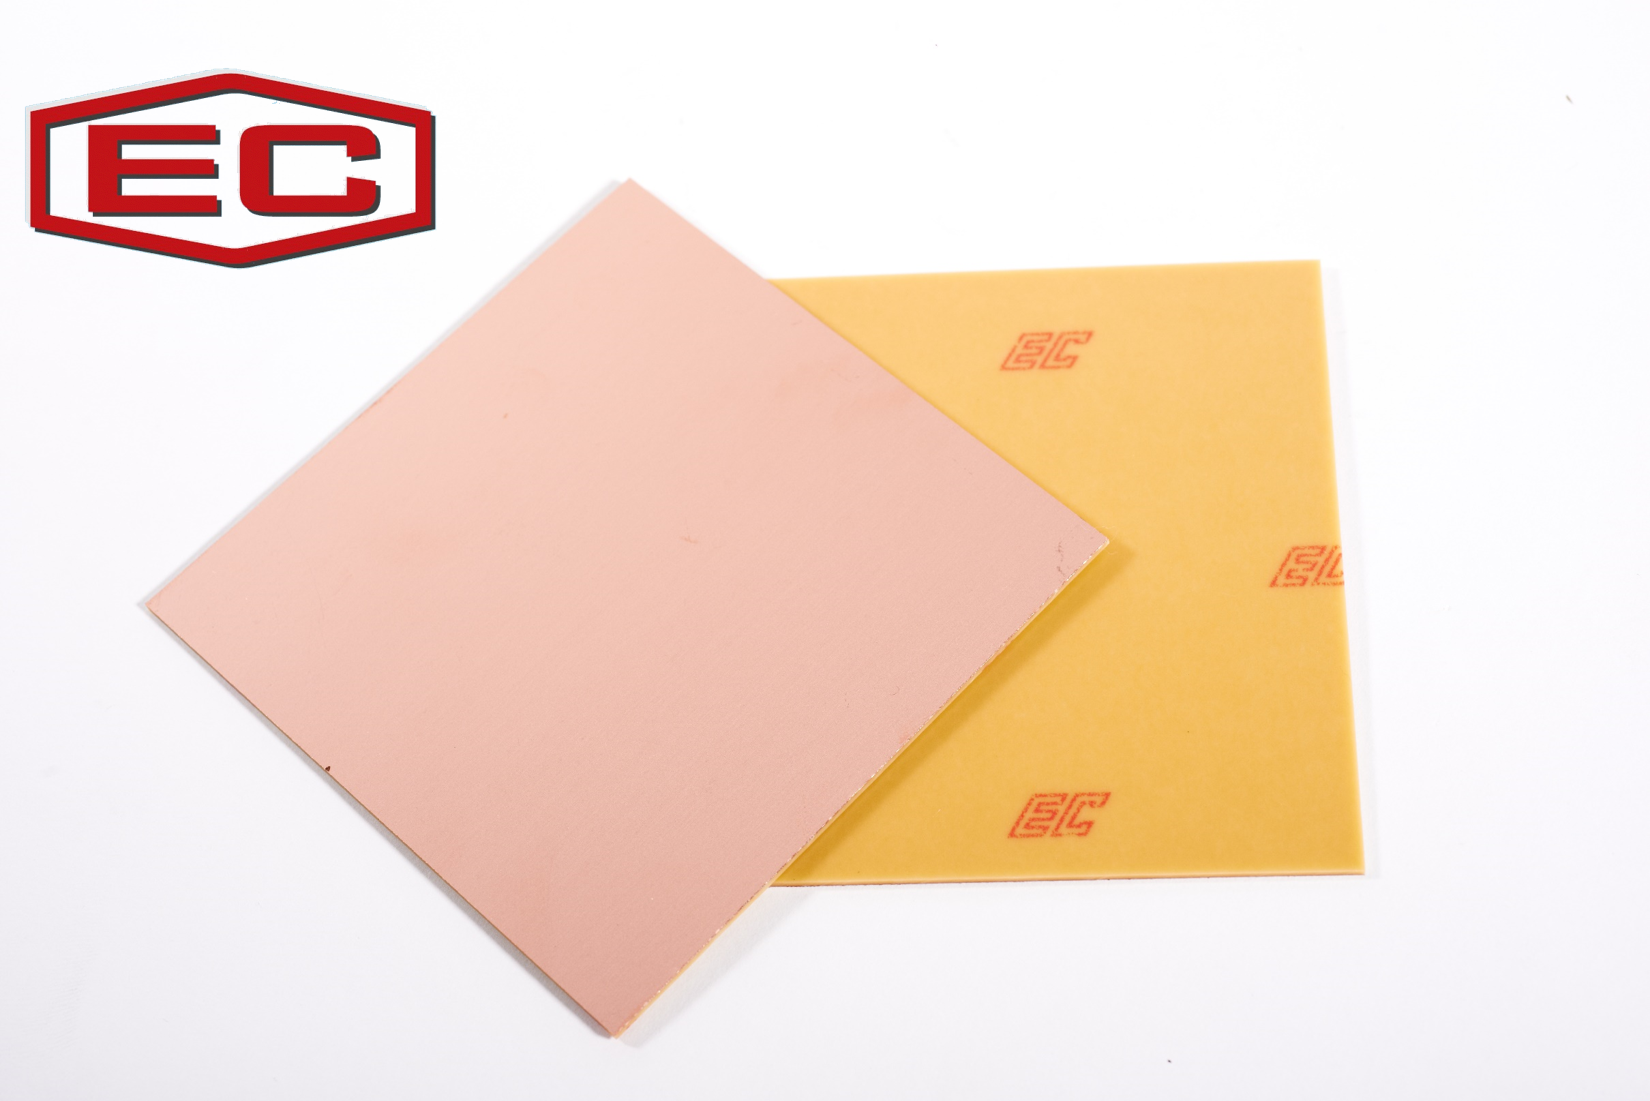 Printed Circuit Board (PCB) Material-Paper Phenolic Copper Clad Laminate